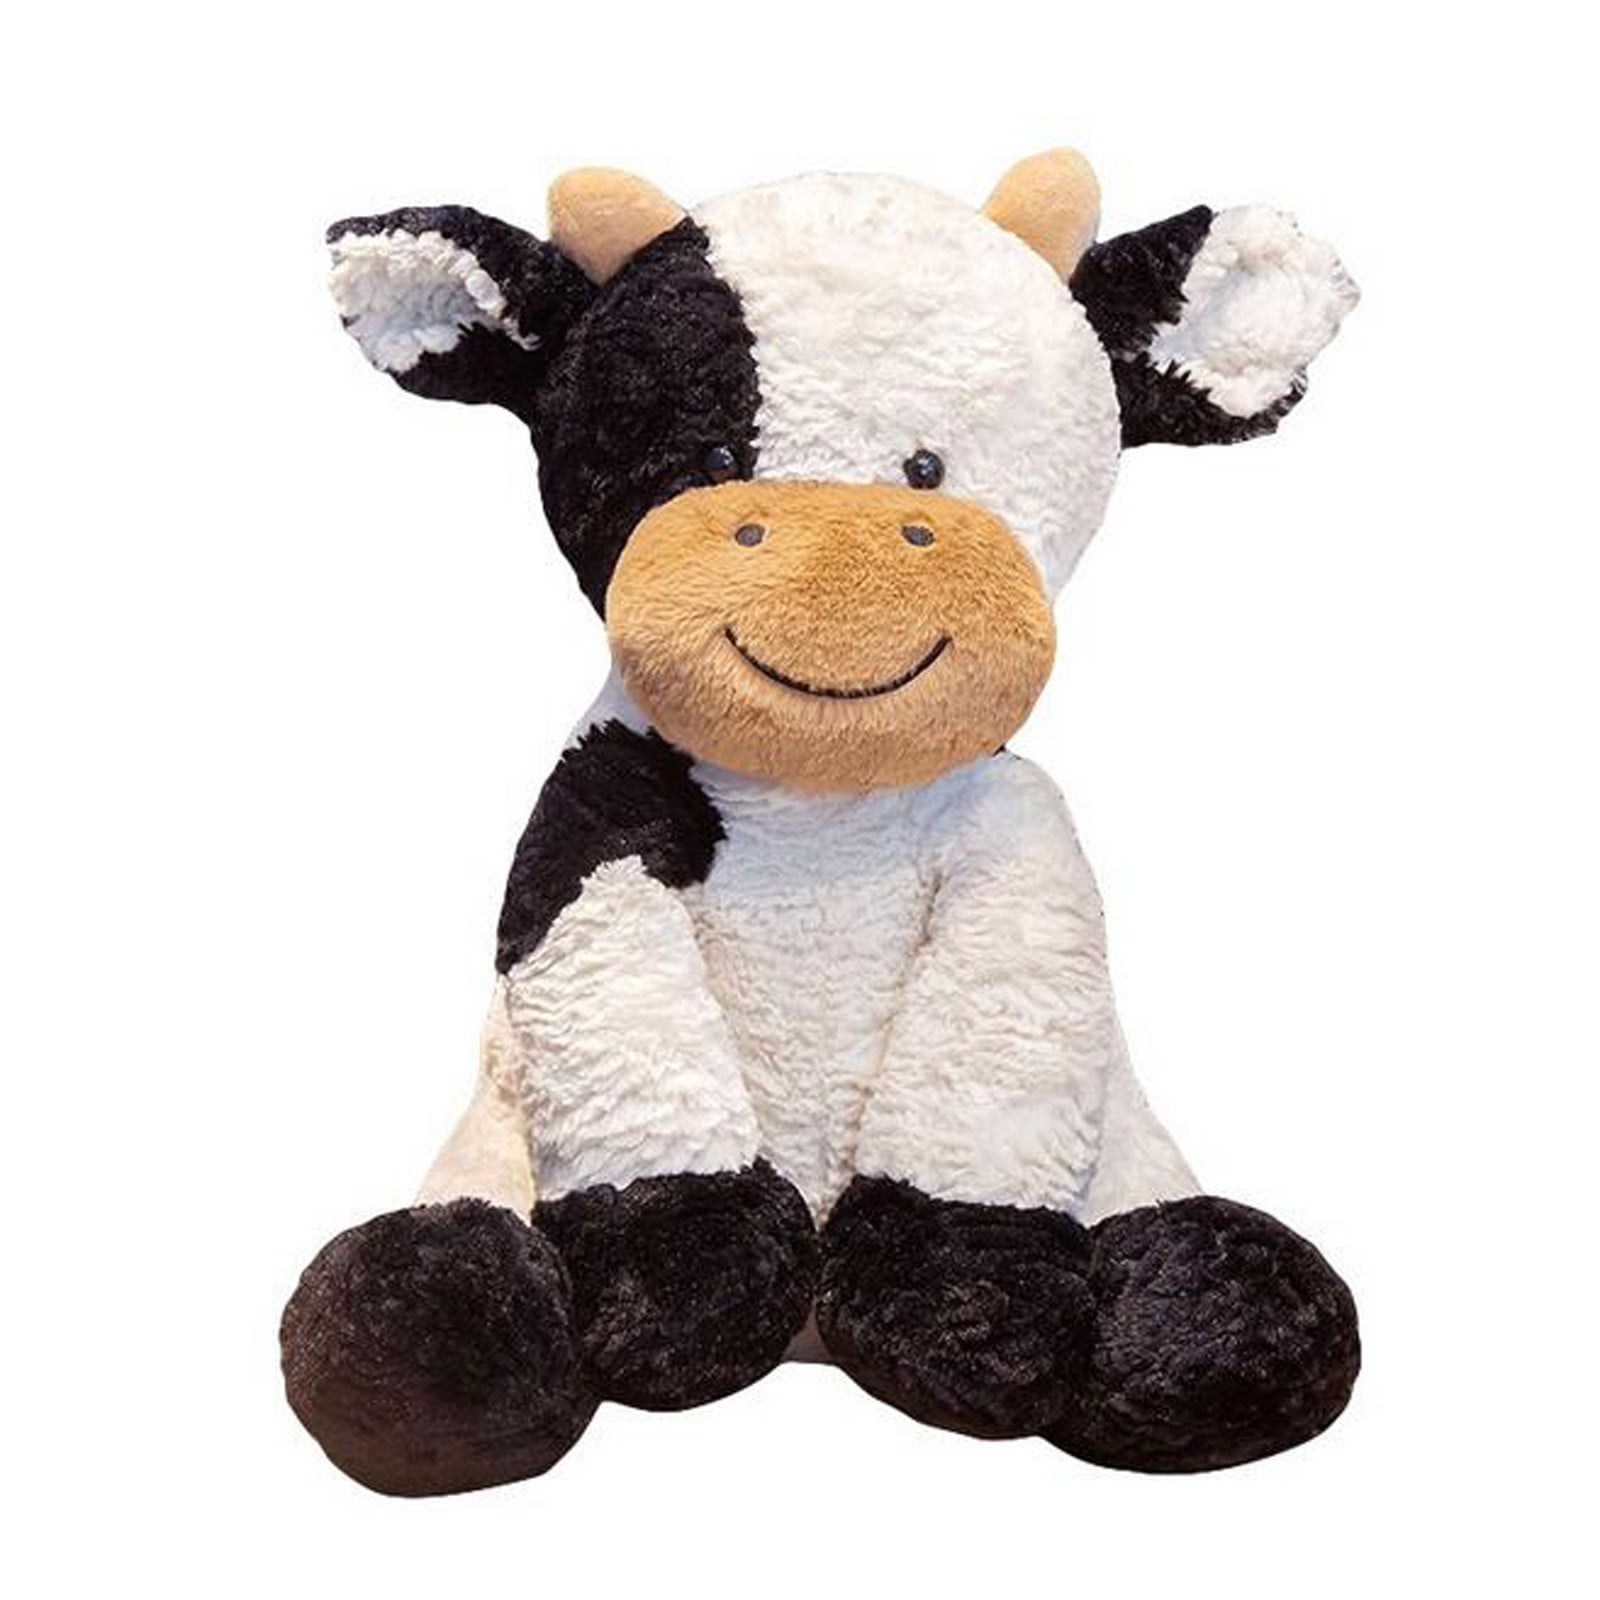 14" Hollie the Highland Cow soft toy Highland Cows teddy cow teddies plush toys 